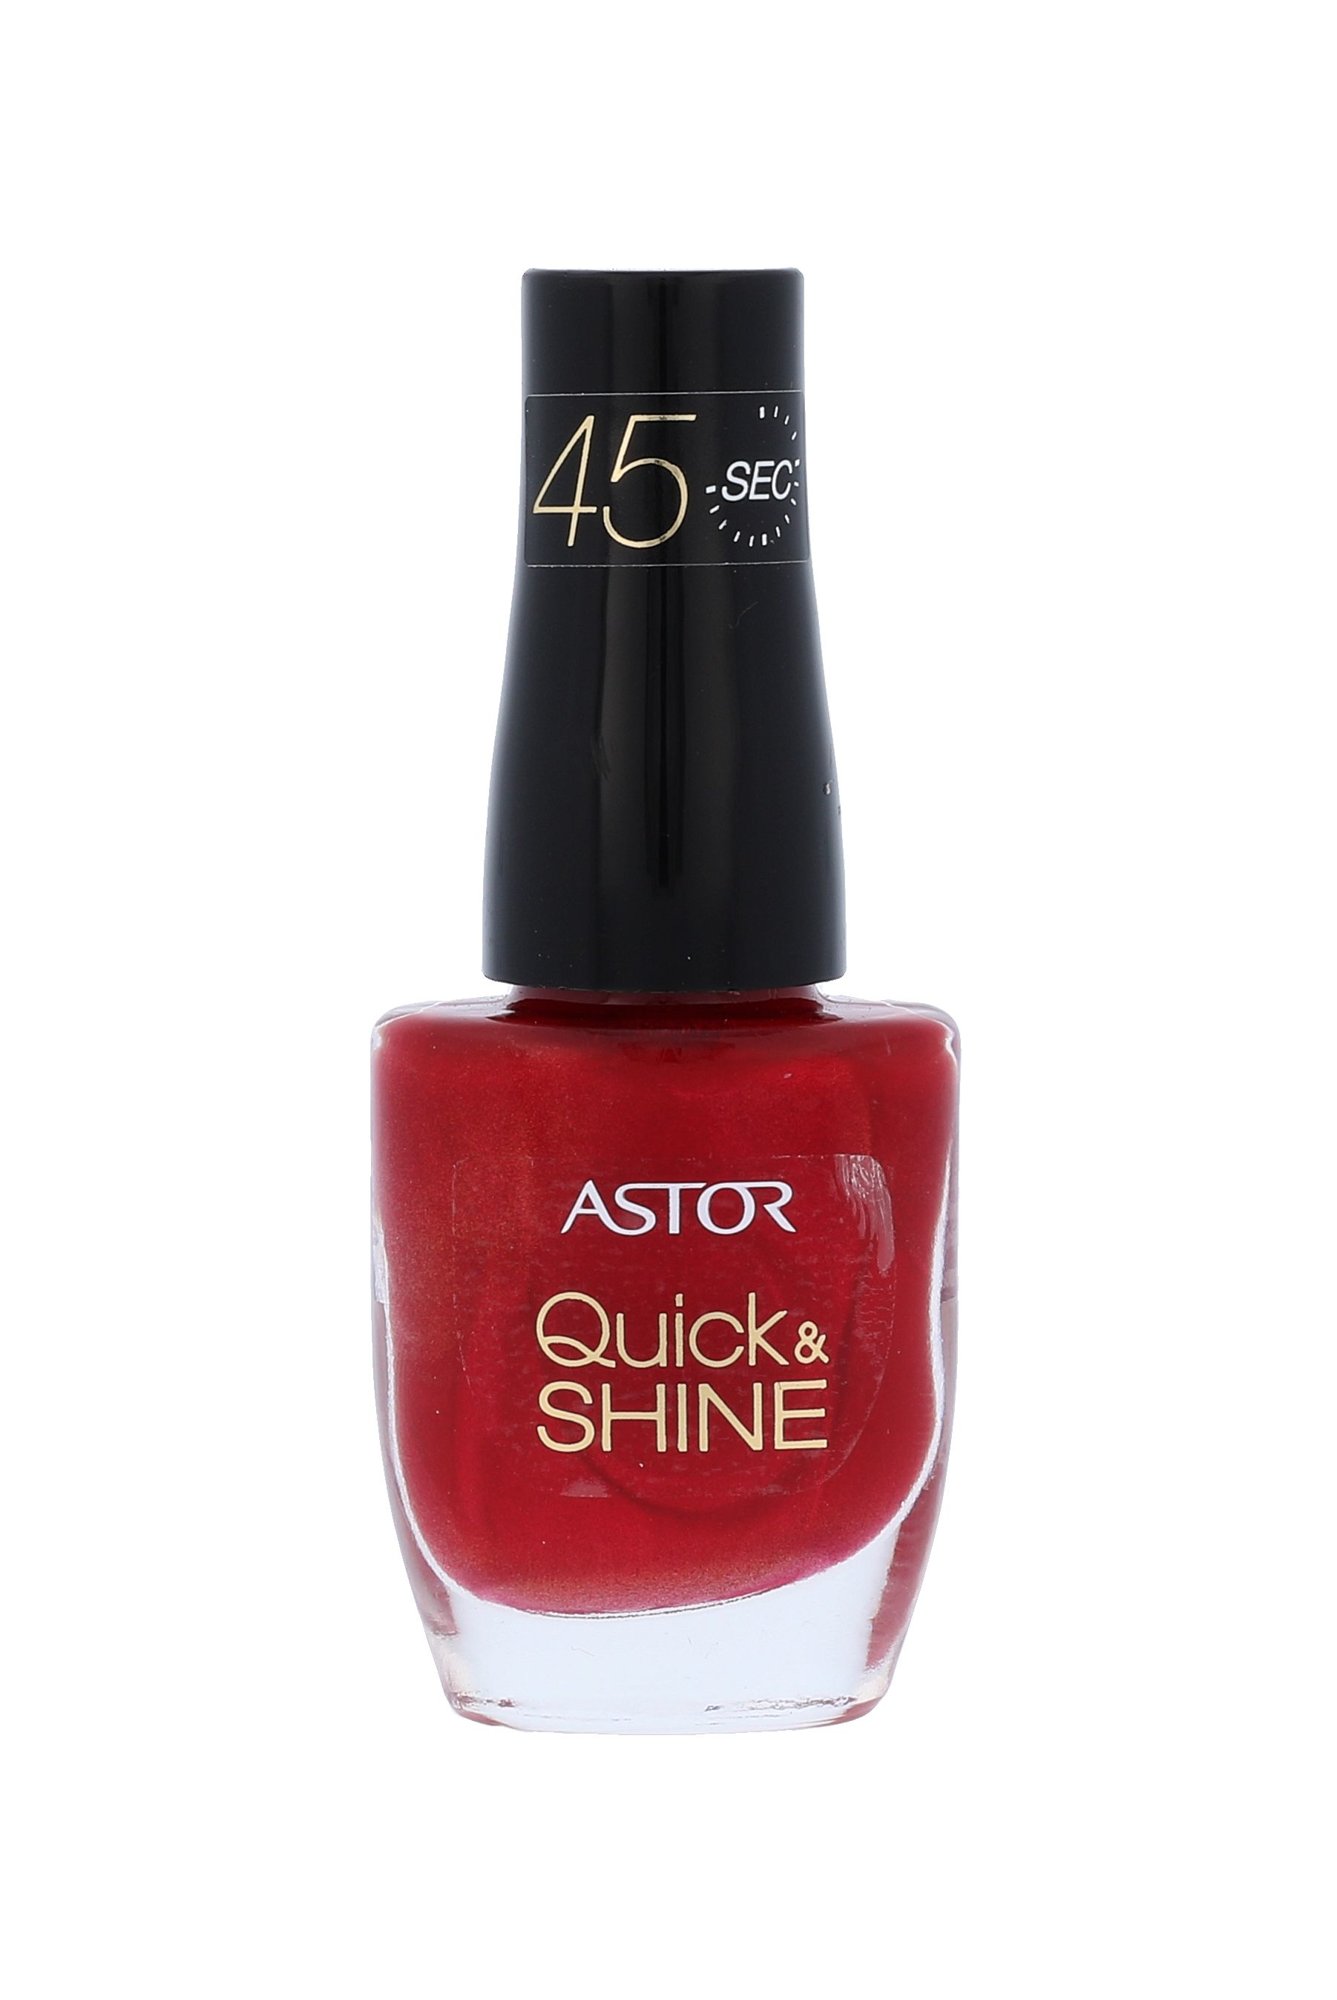 Astor Quick & Shine Nail Polish